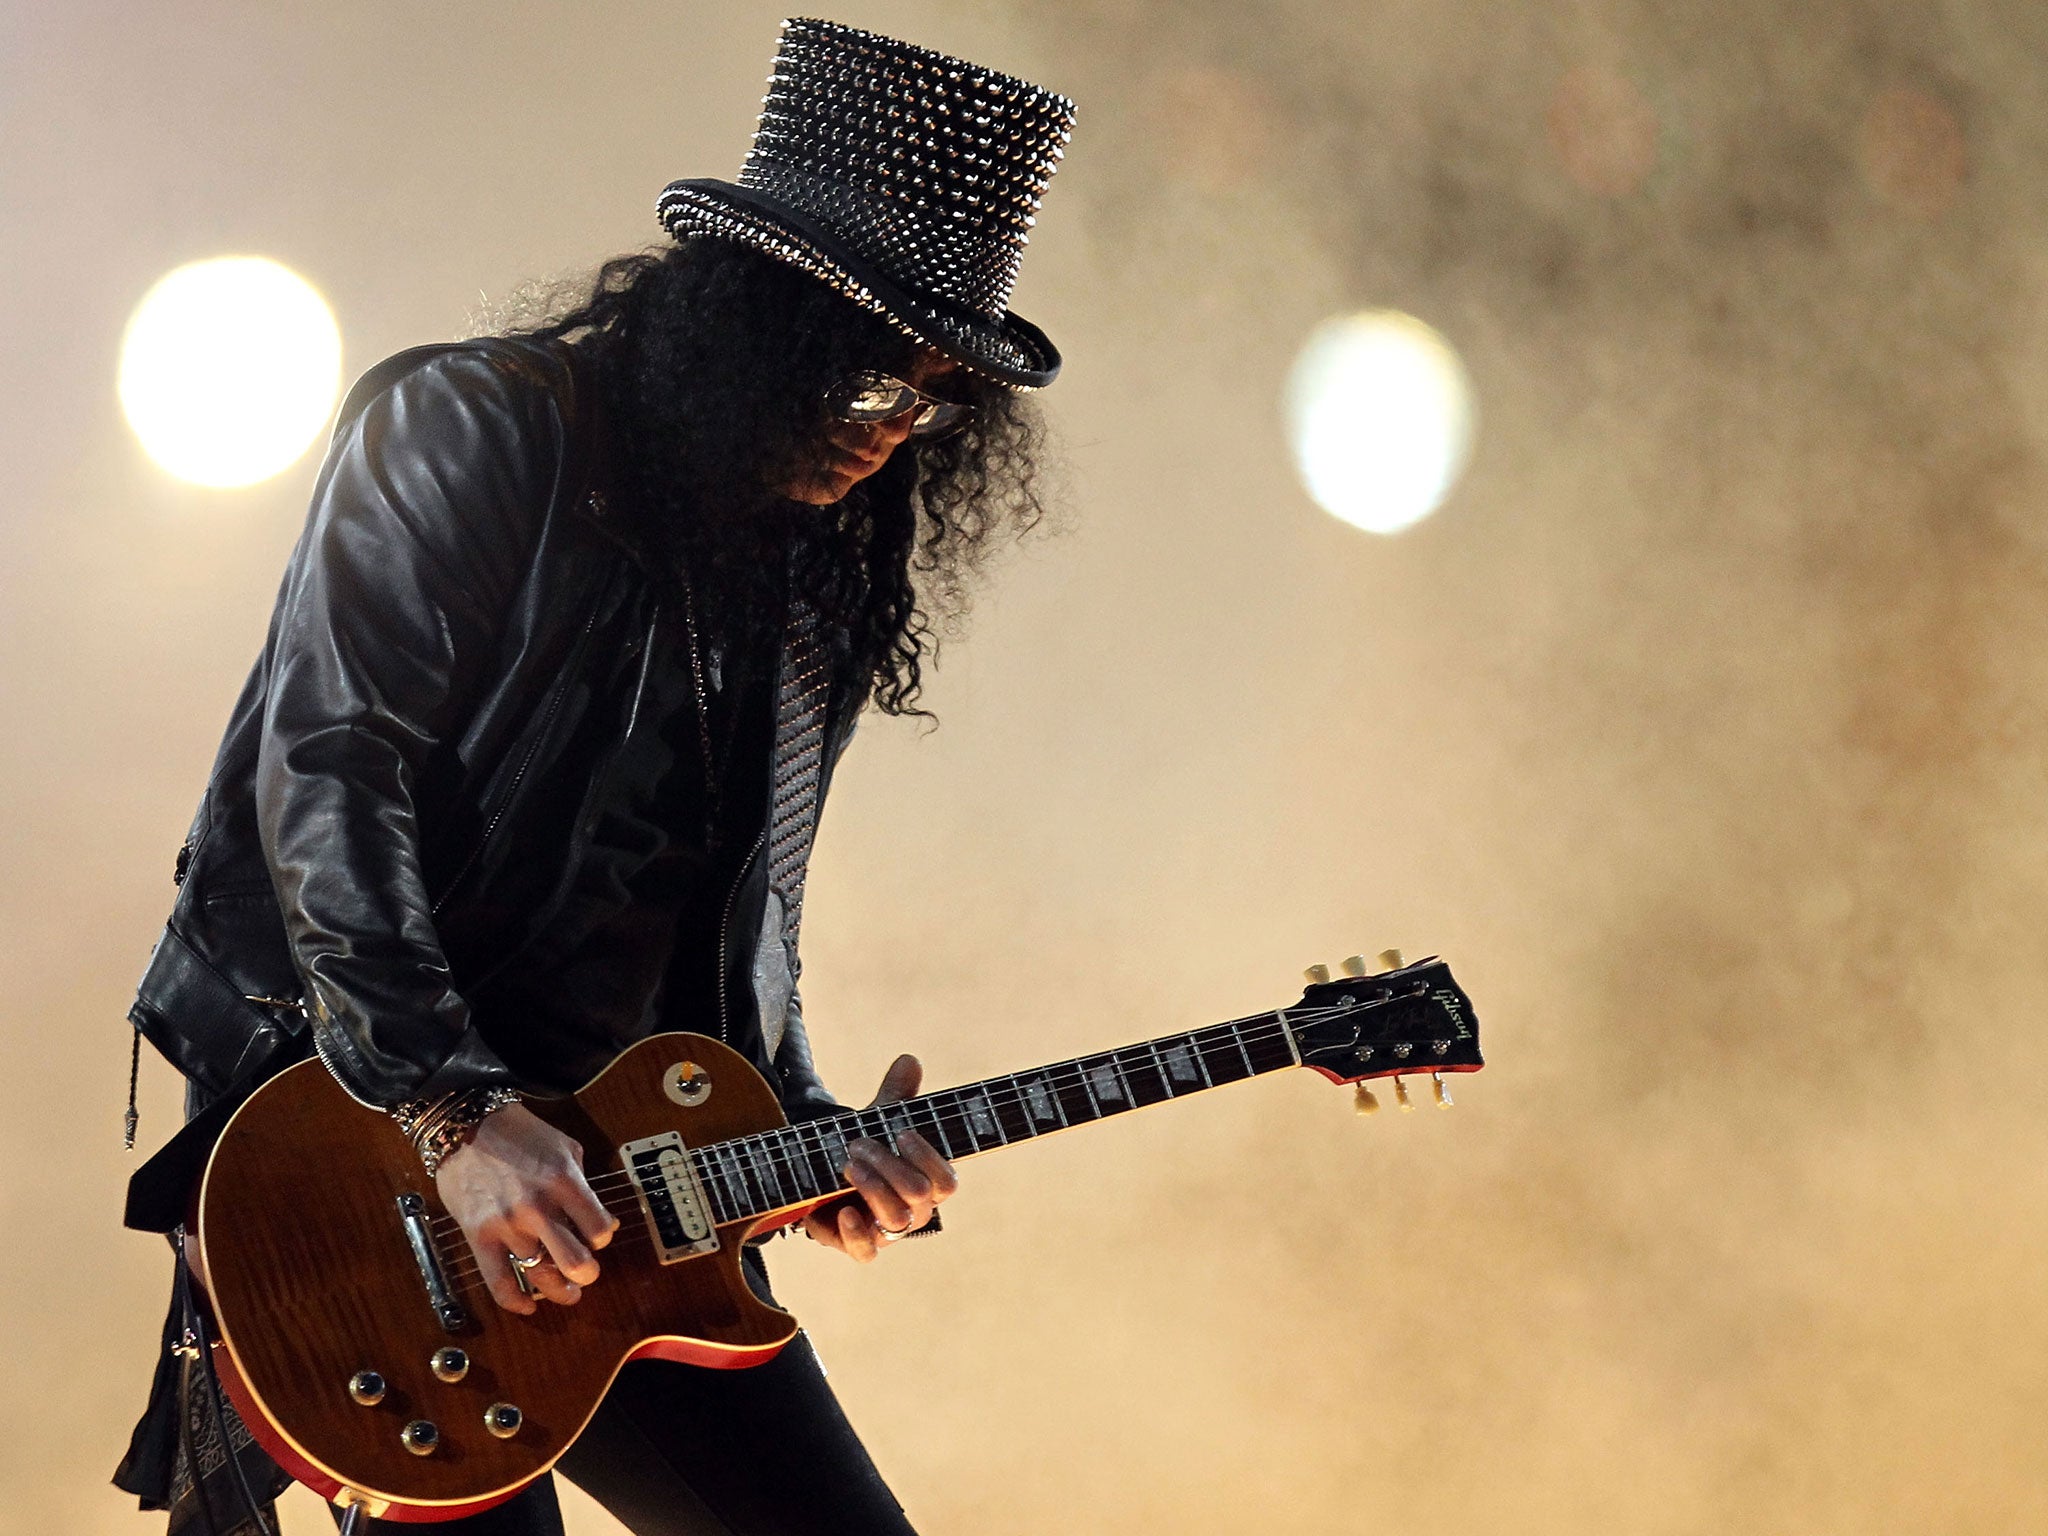 Come on Slash, make a Guns N' Roses reunion happen